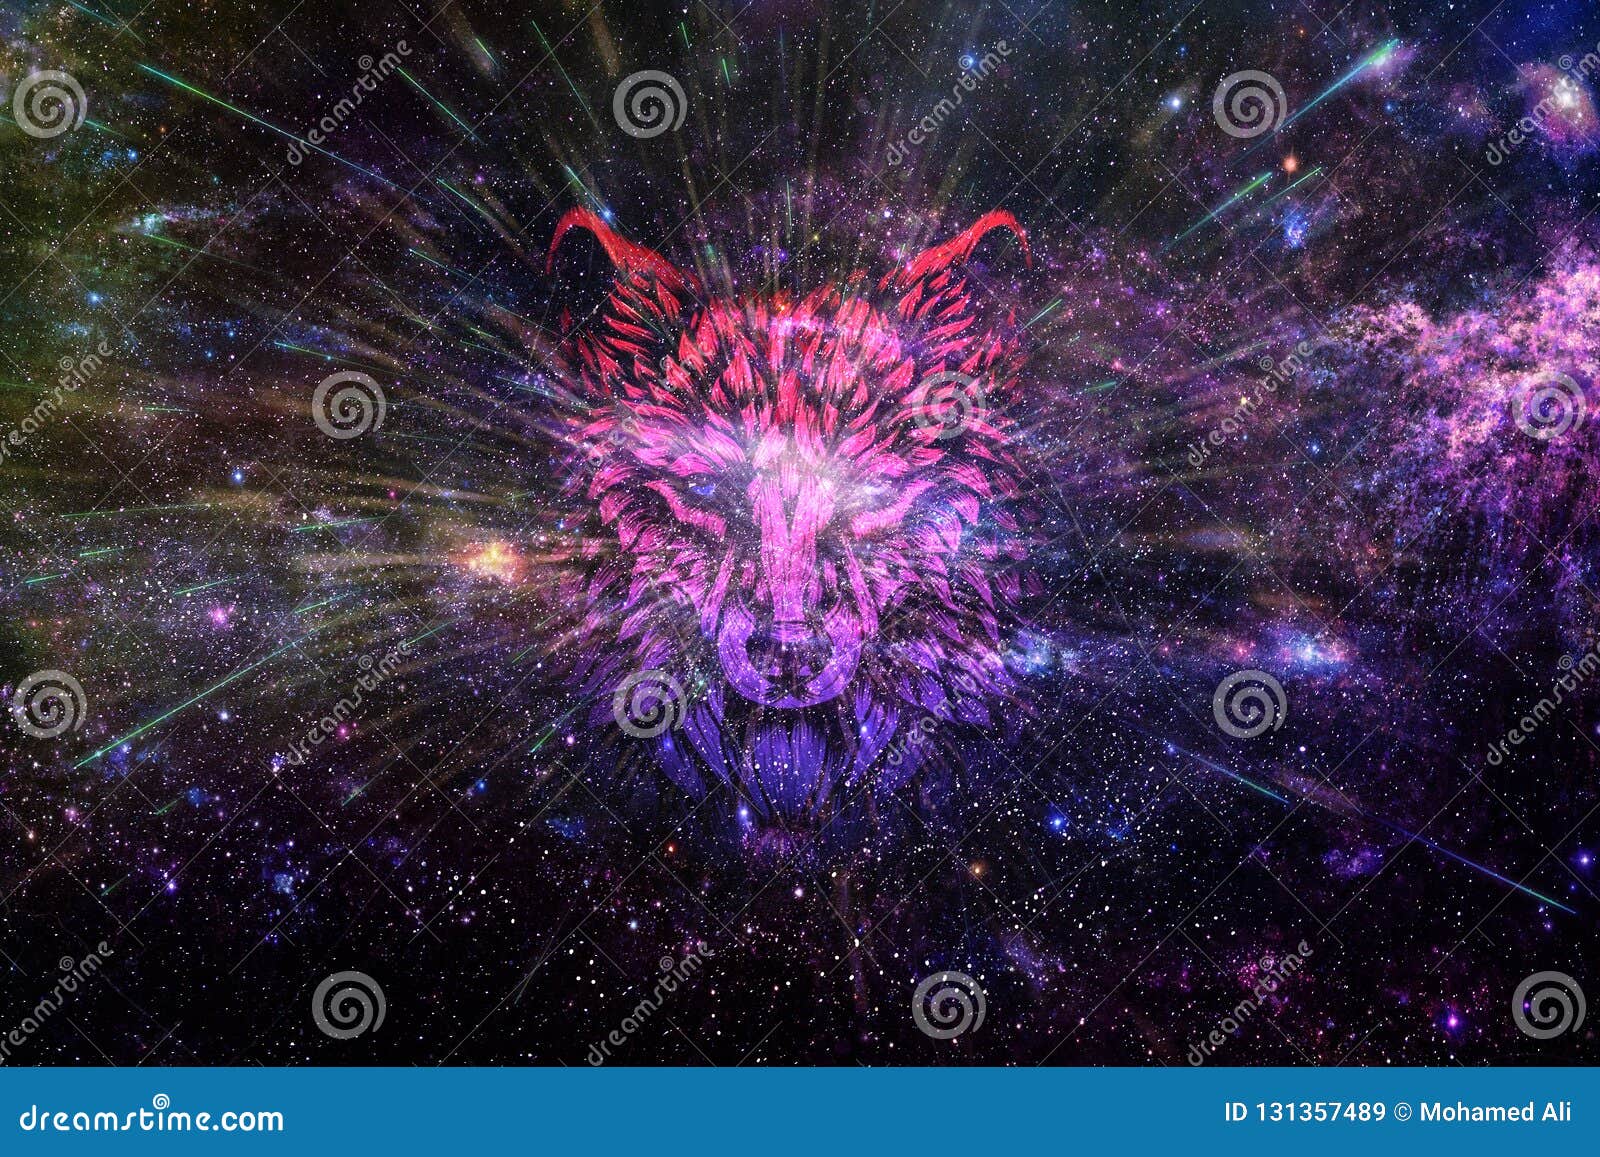 Artistic Abstract Digital Wolf Into A Dark Theme Smooth Galaxy